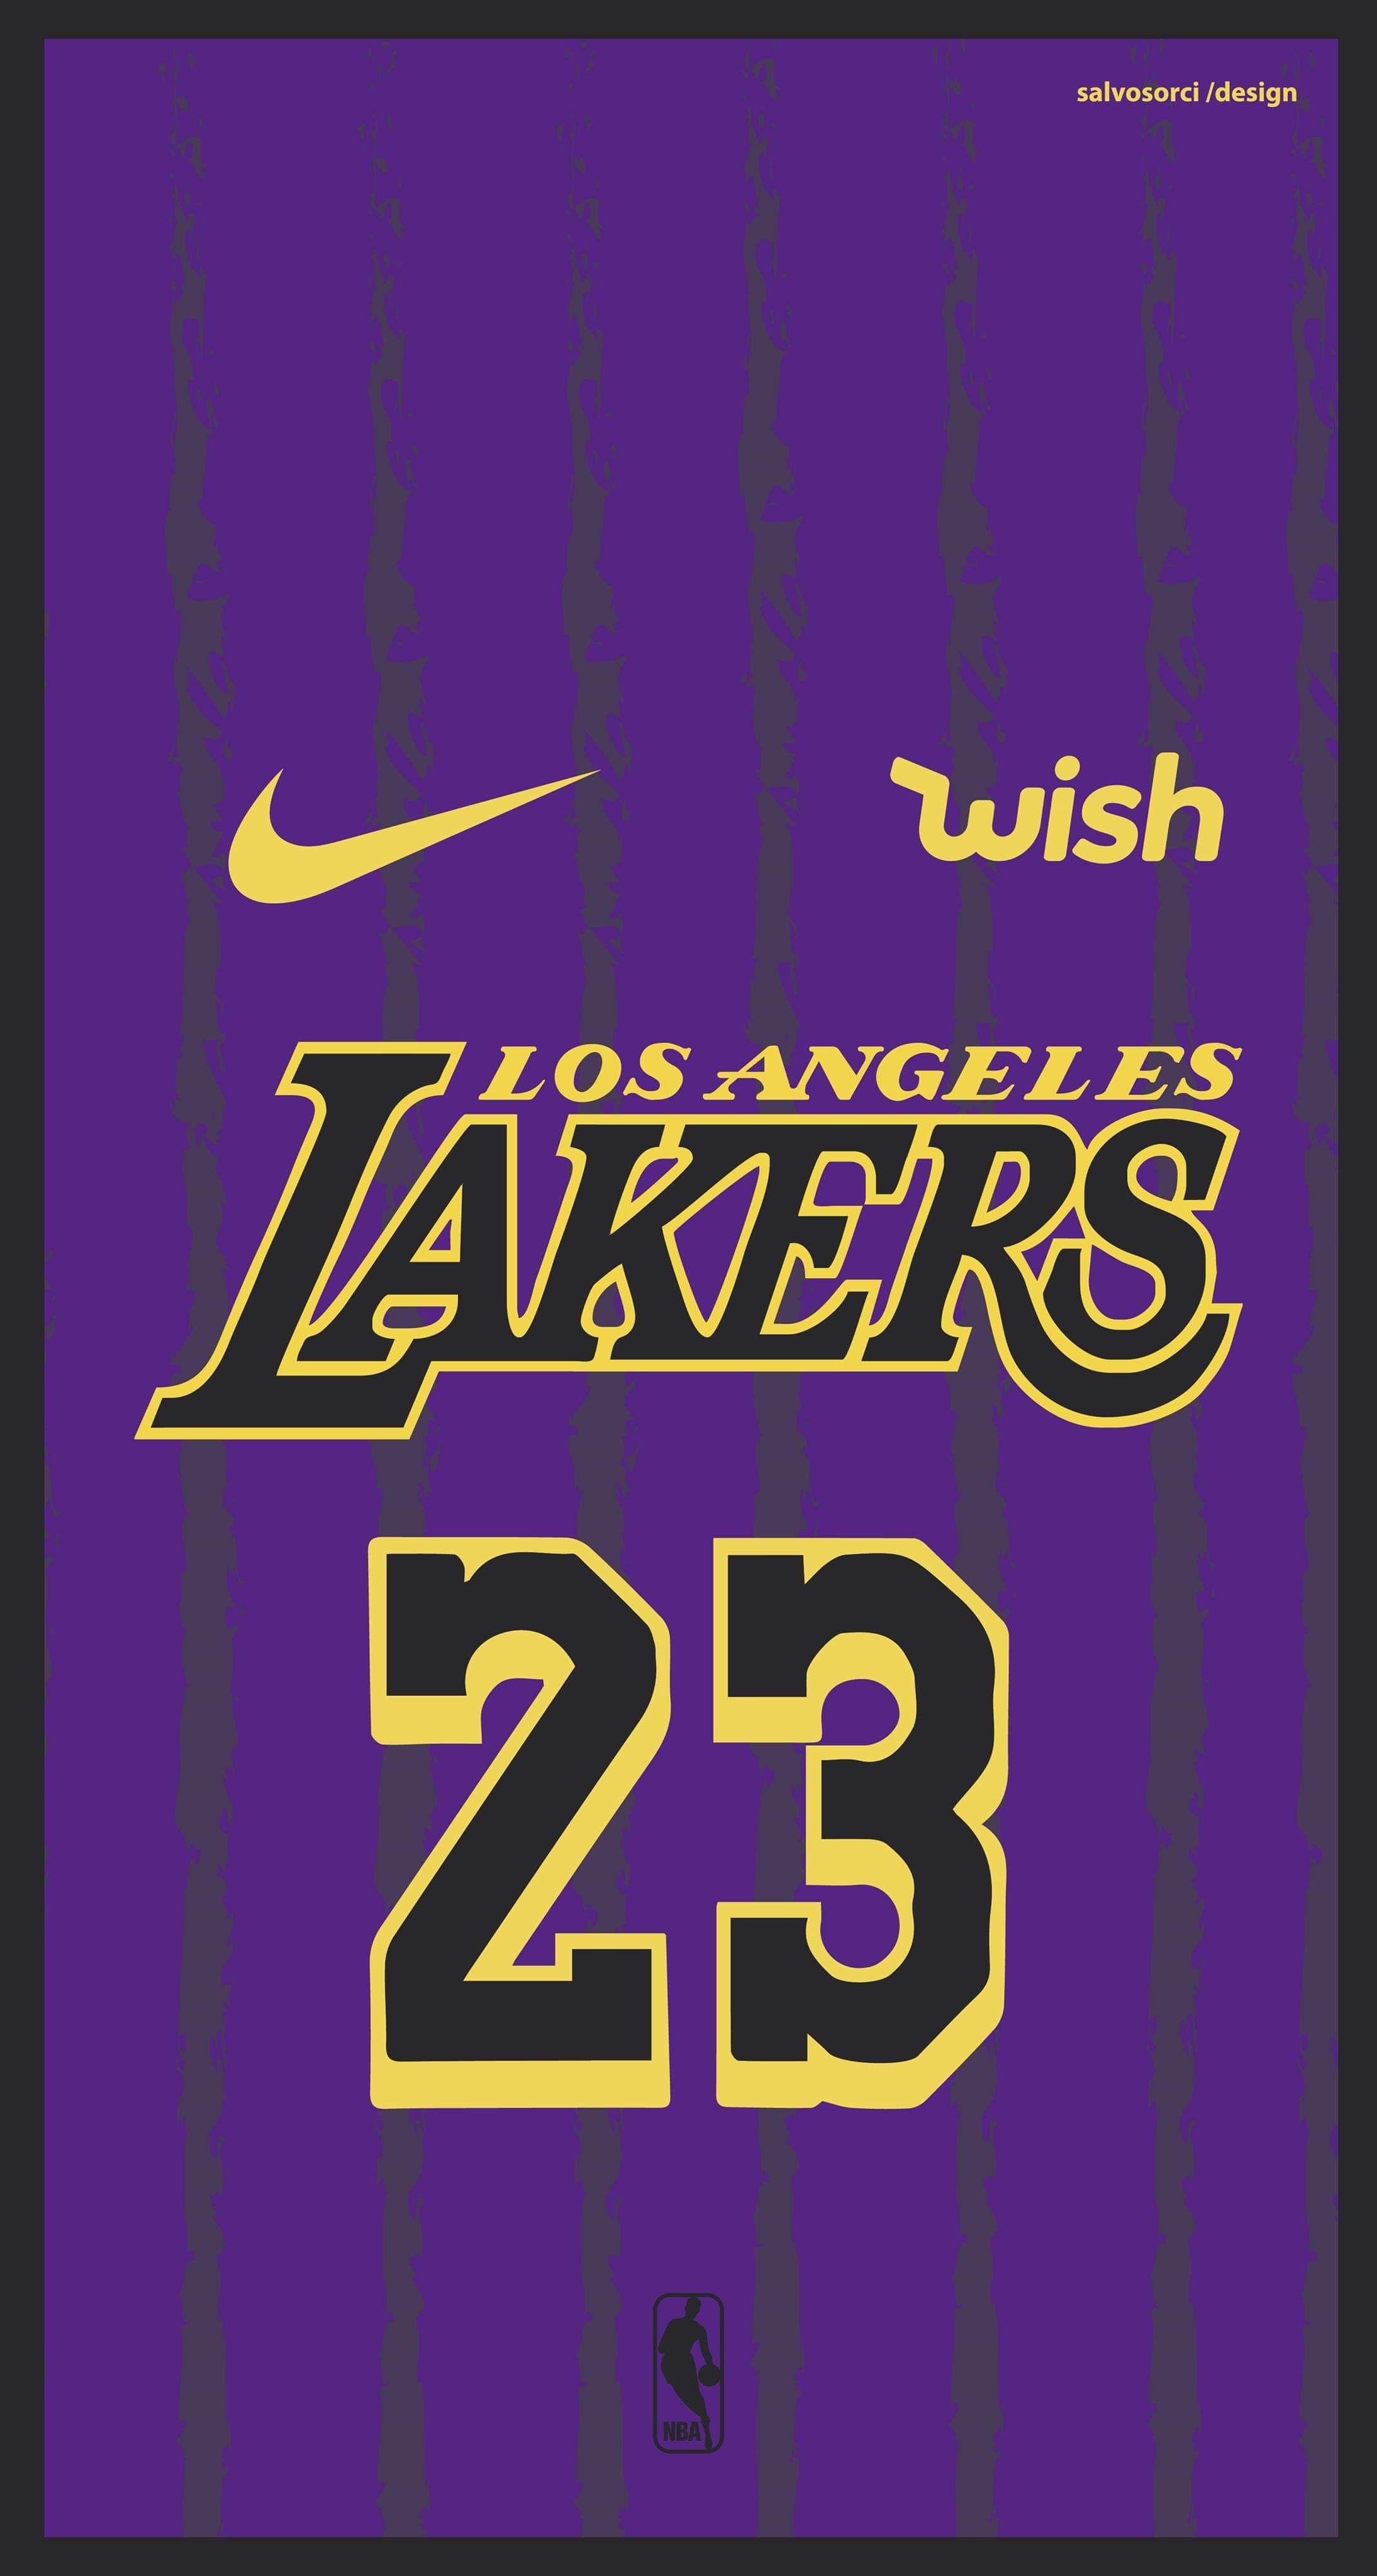 LOS ANGELES LAKERS NBA LeBron James Vector Shirt Nike City Edition 2018 19 IPhone Wallpaper. Nba Lebron James, Lebron James Image, Lebron James Wallpaper